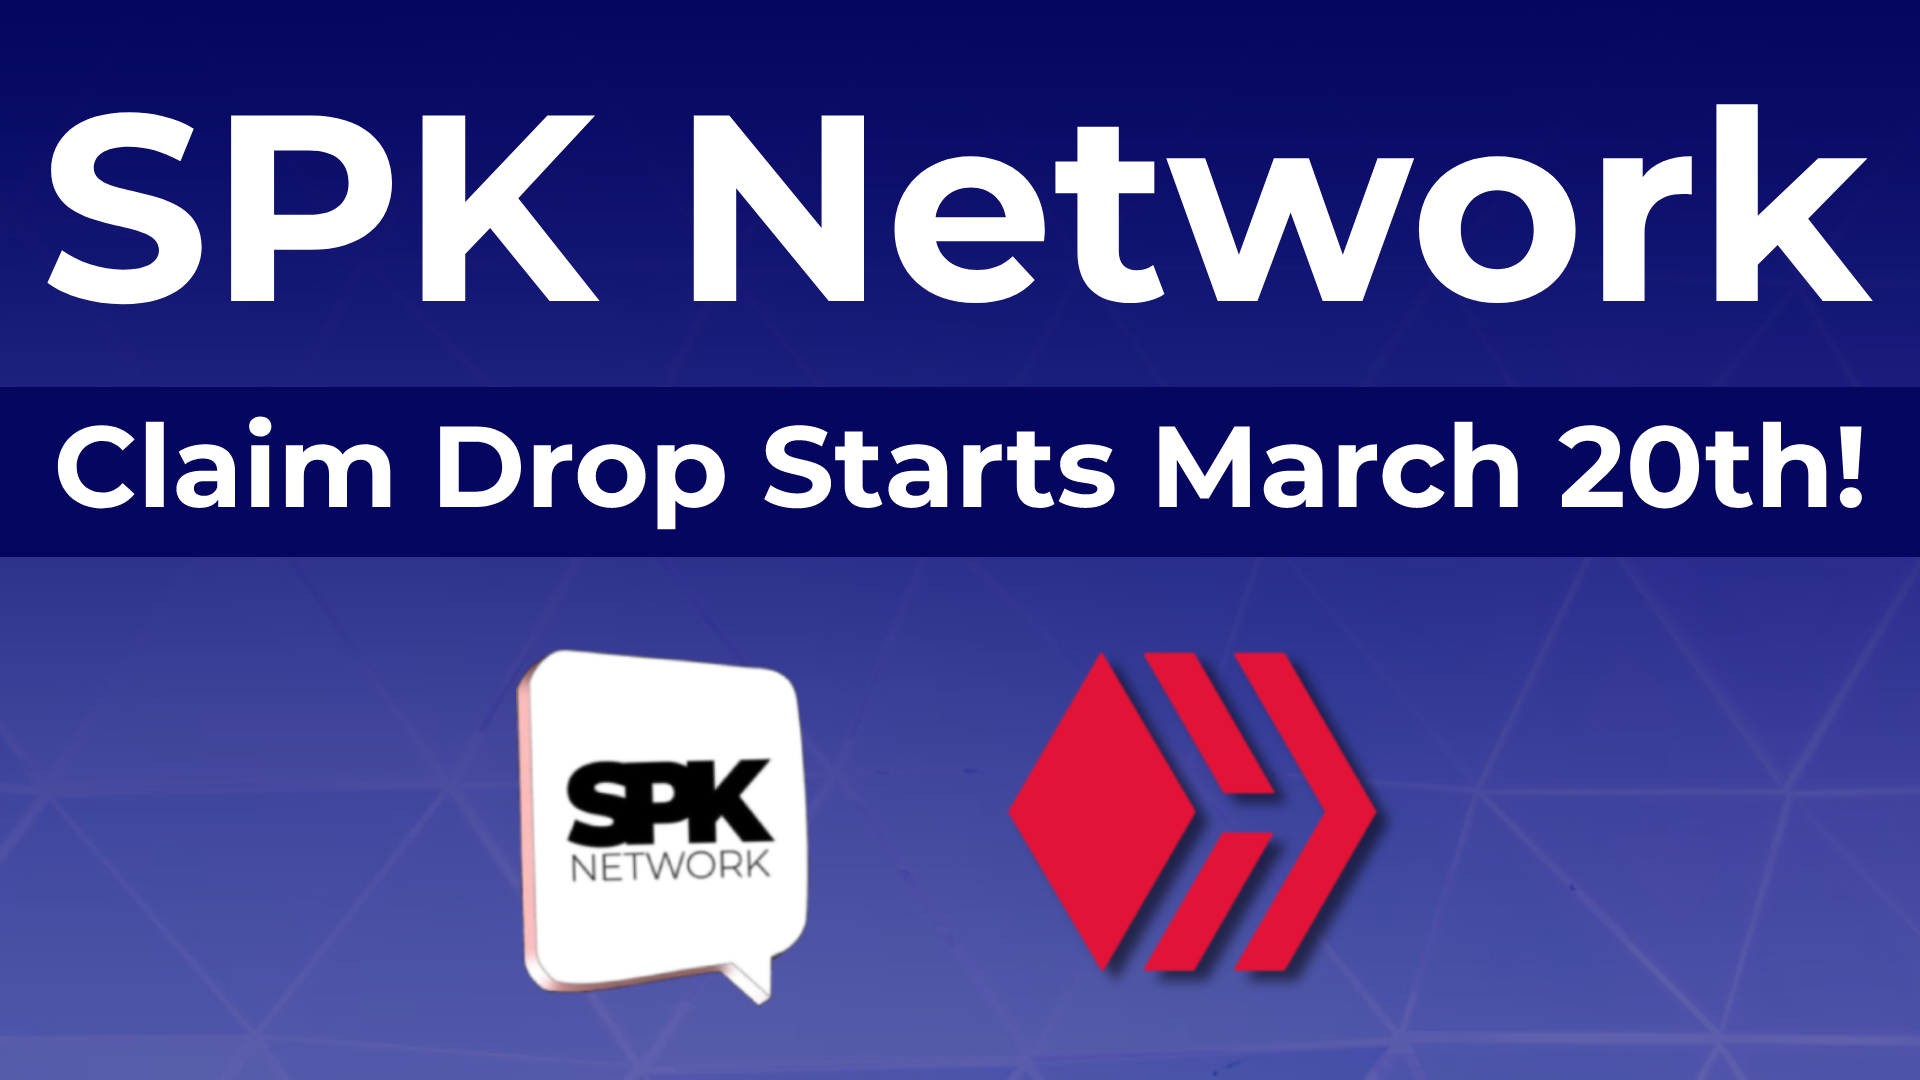 @spknetwork/spk-network-claim-drop-starts-on-march-20th